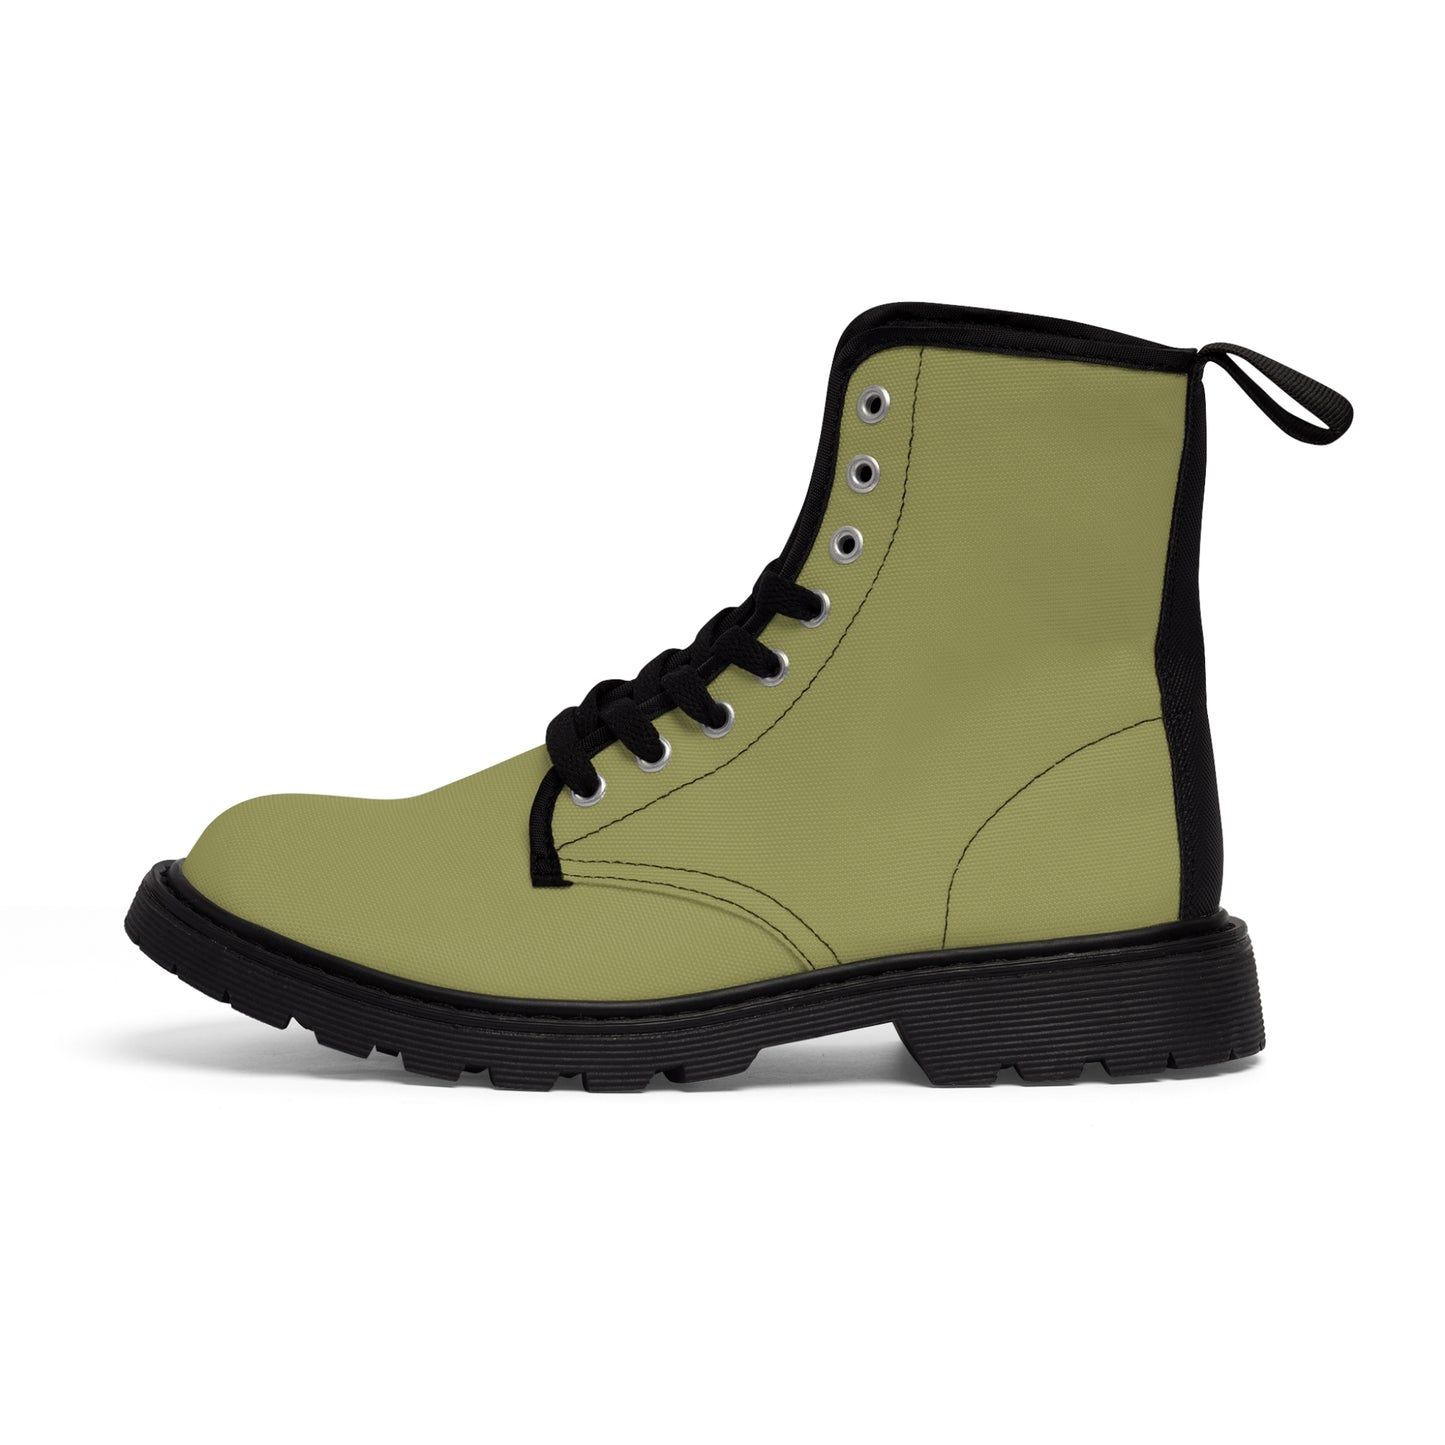 Women's Canvas Boots - Light Moss US 11 Black sole